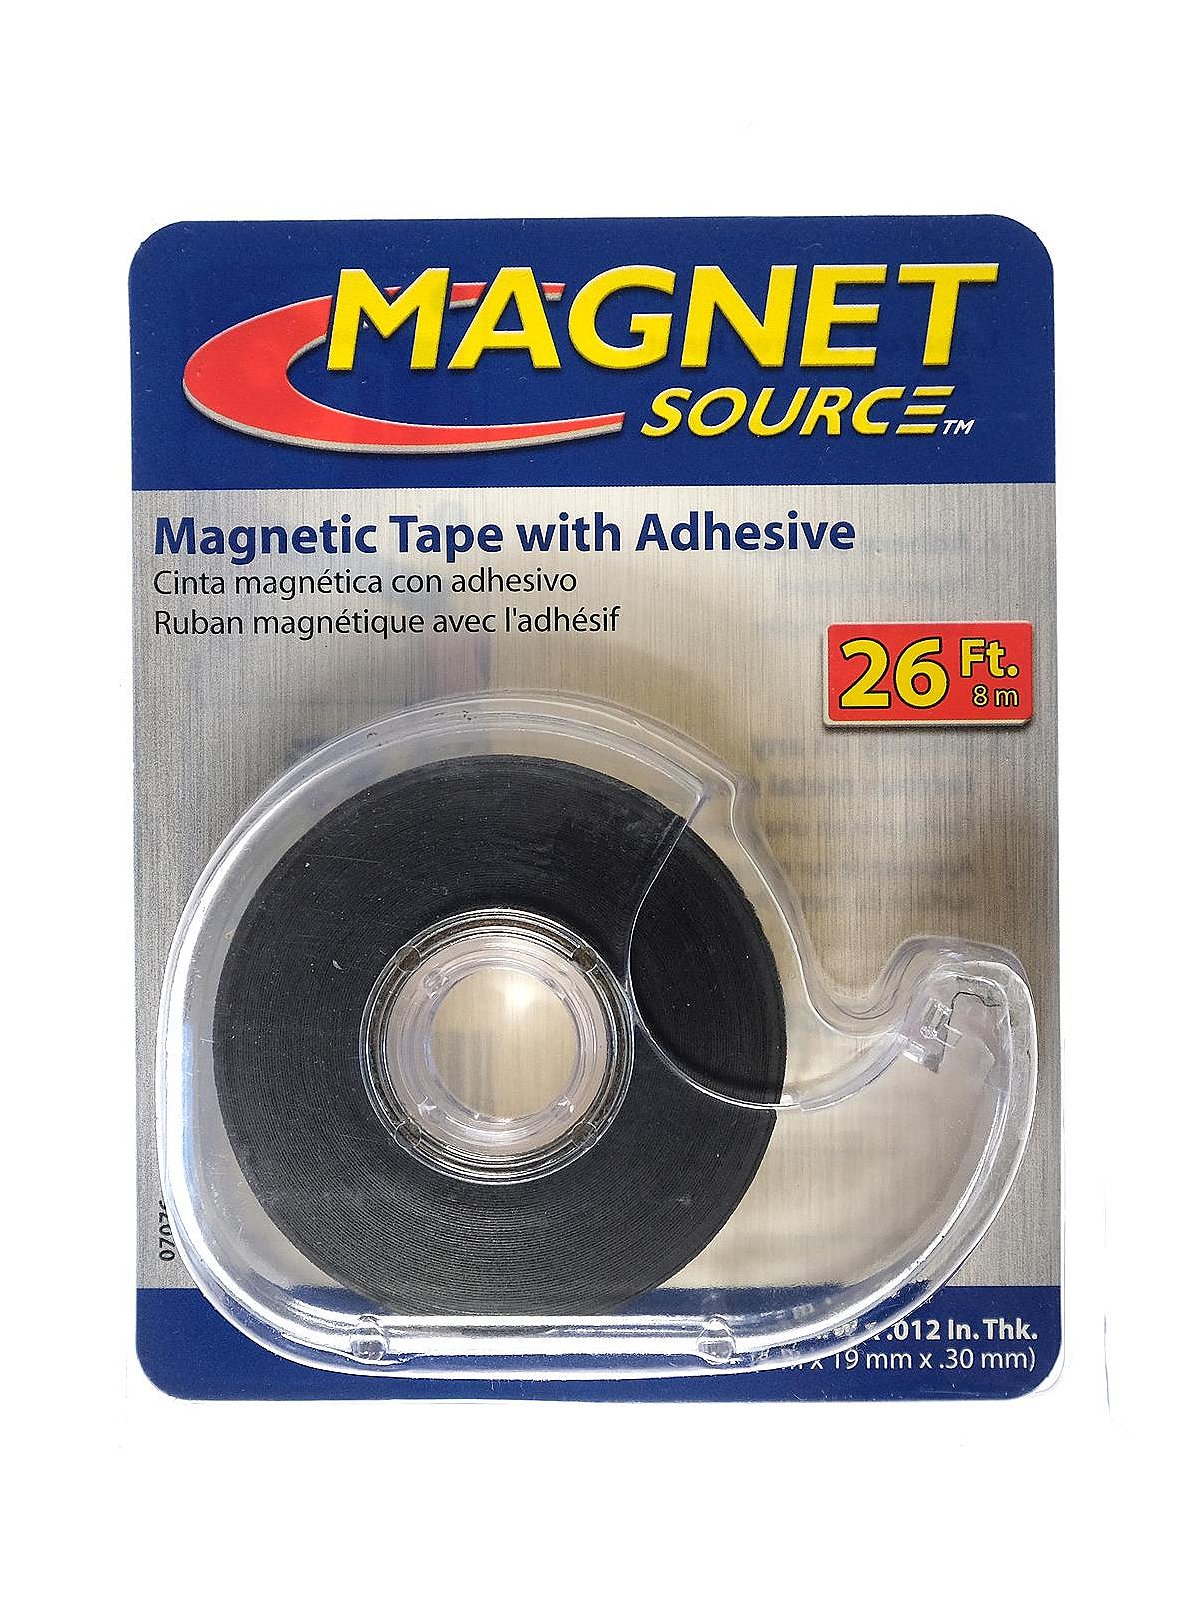 Underinddel Transformer aluminium The Magnet Source Magnet Tape with Dispenser | MisterArt.com